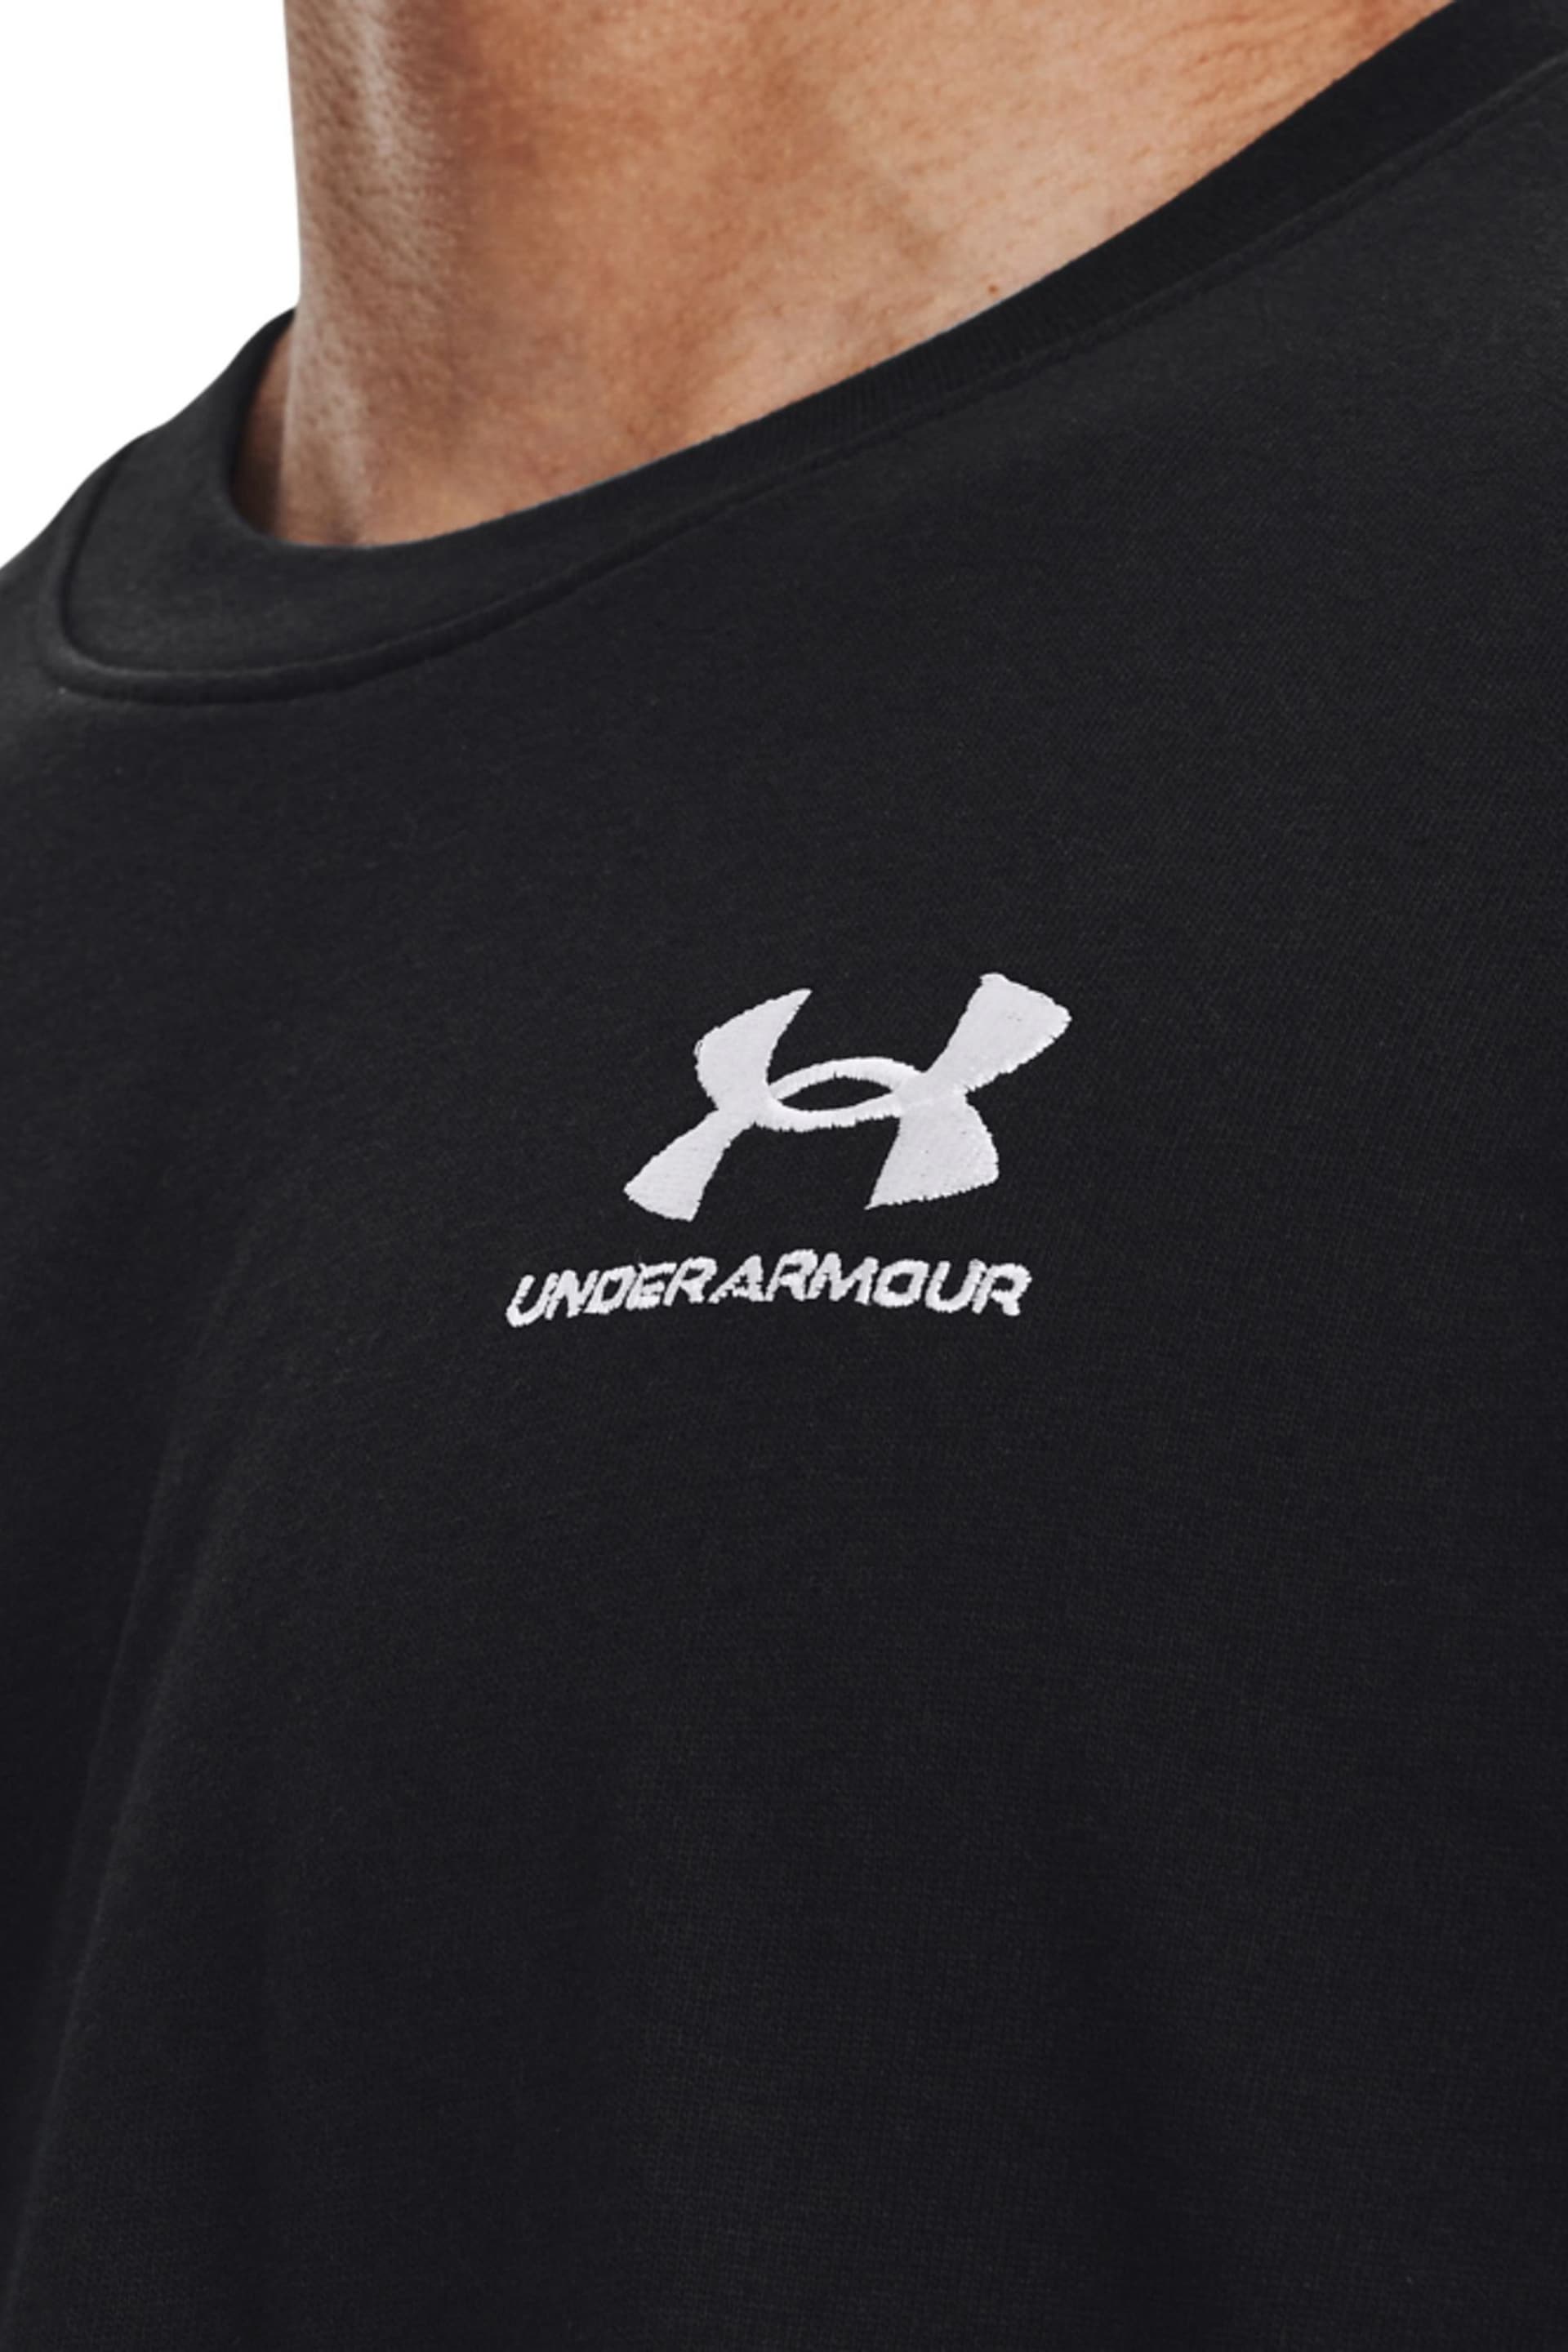 Under Armour Black Logo Heavyweight T-Shirt - Image 4 of 6